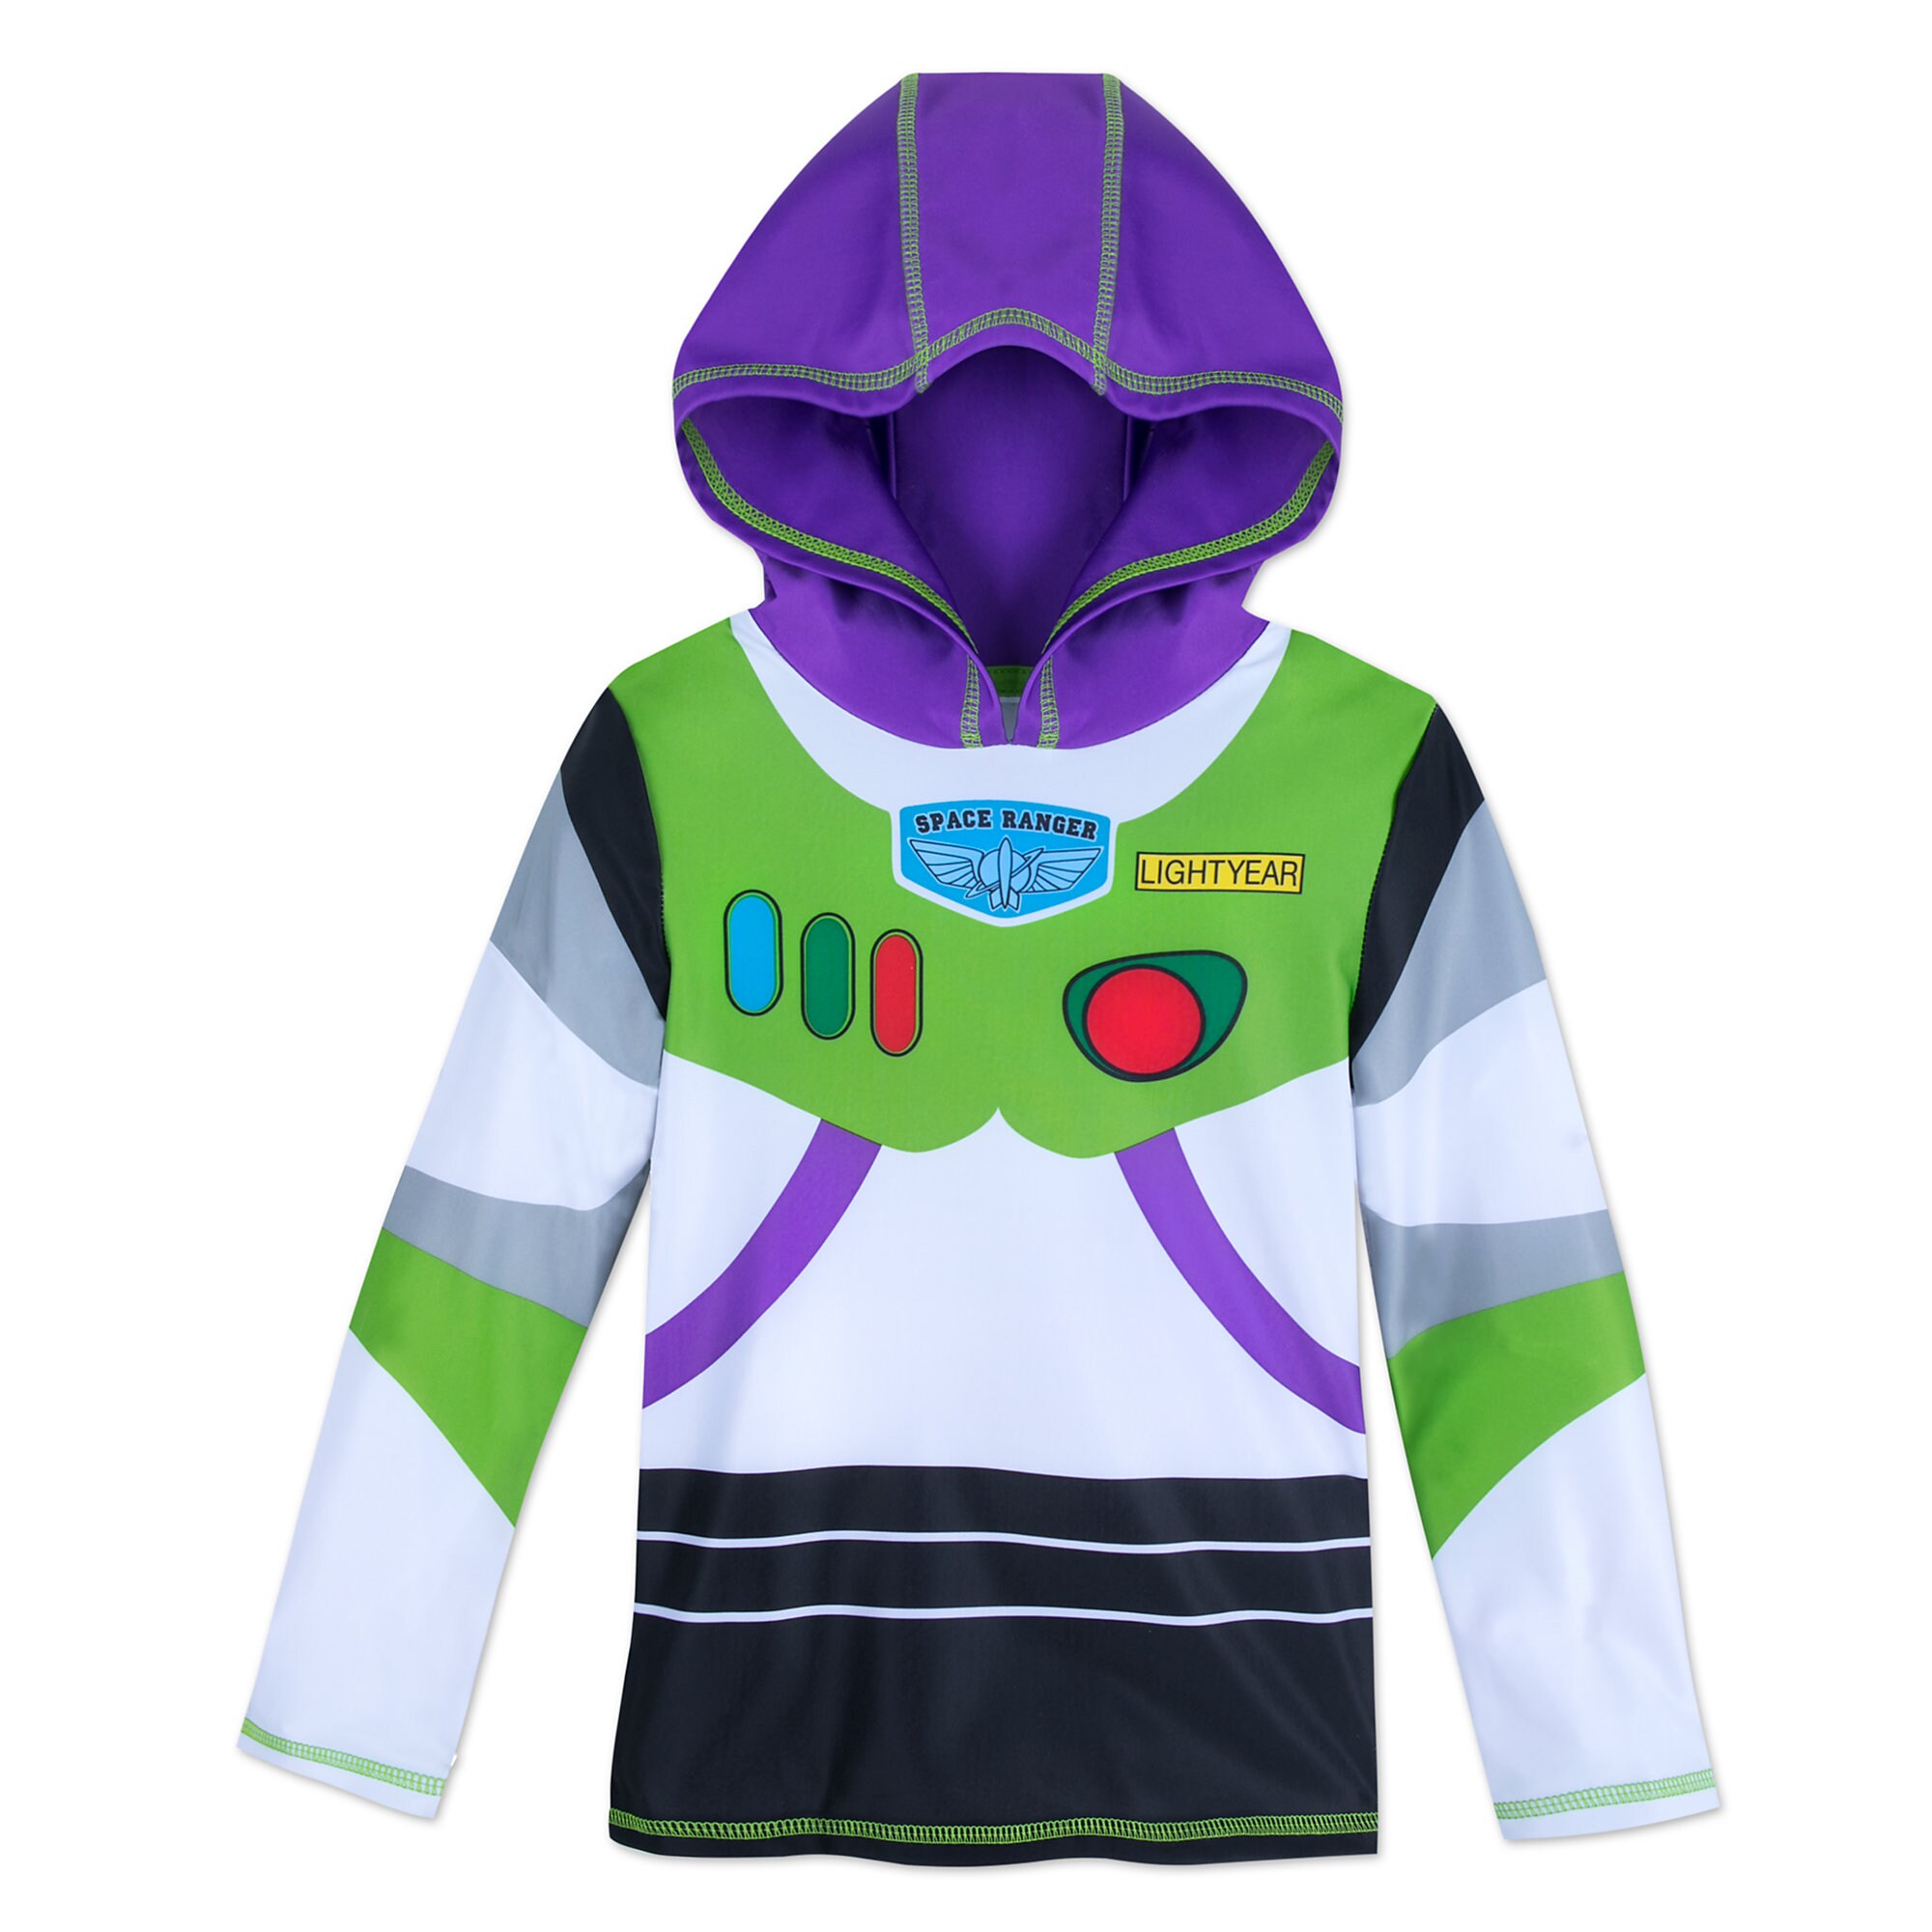 Buzz Lightyear Hooded Rash Guard for Kids